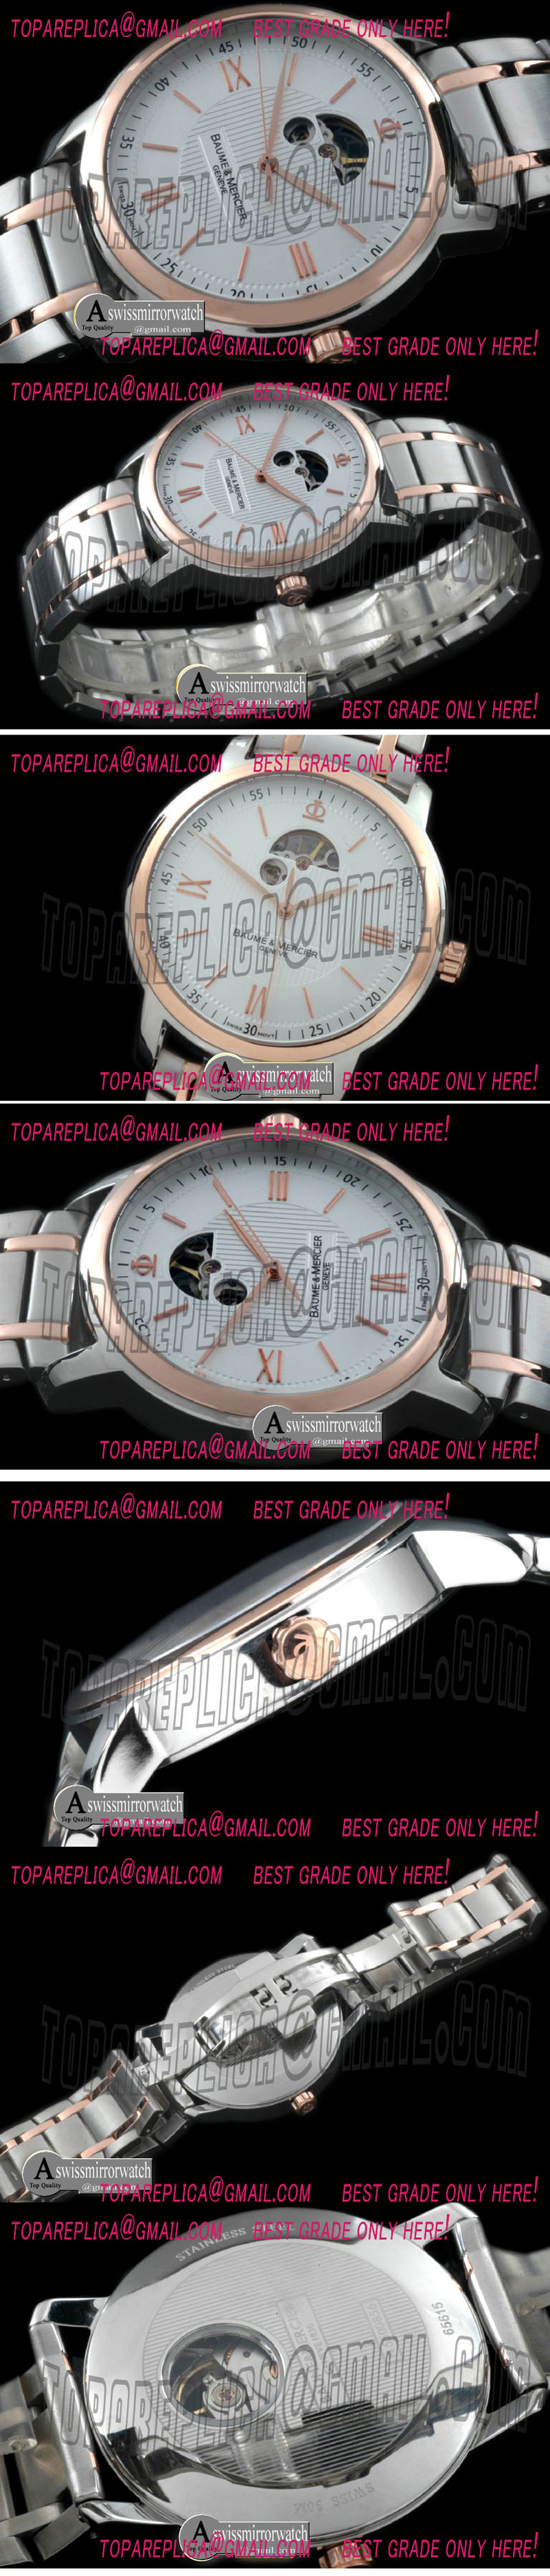 Replica Baume Mercier Watches